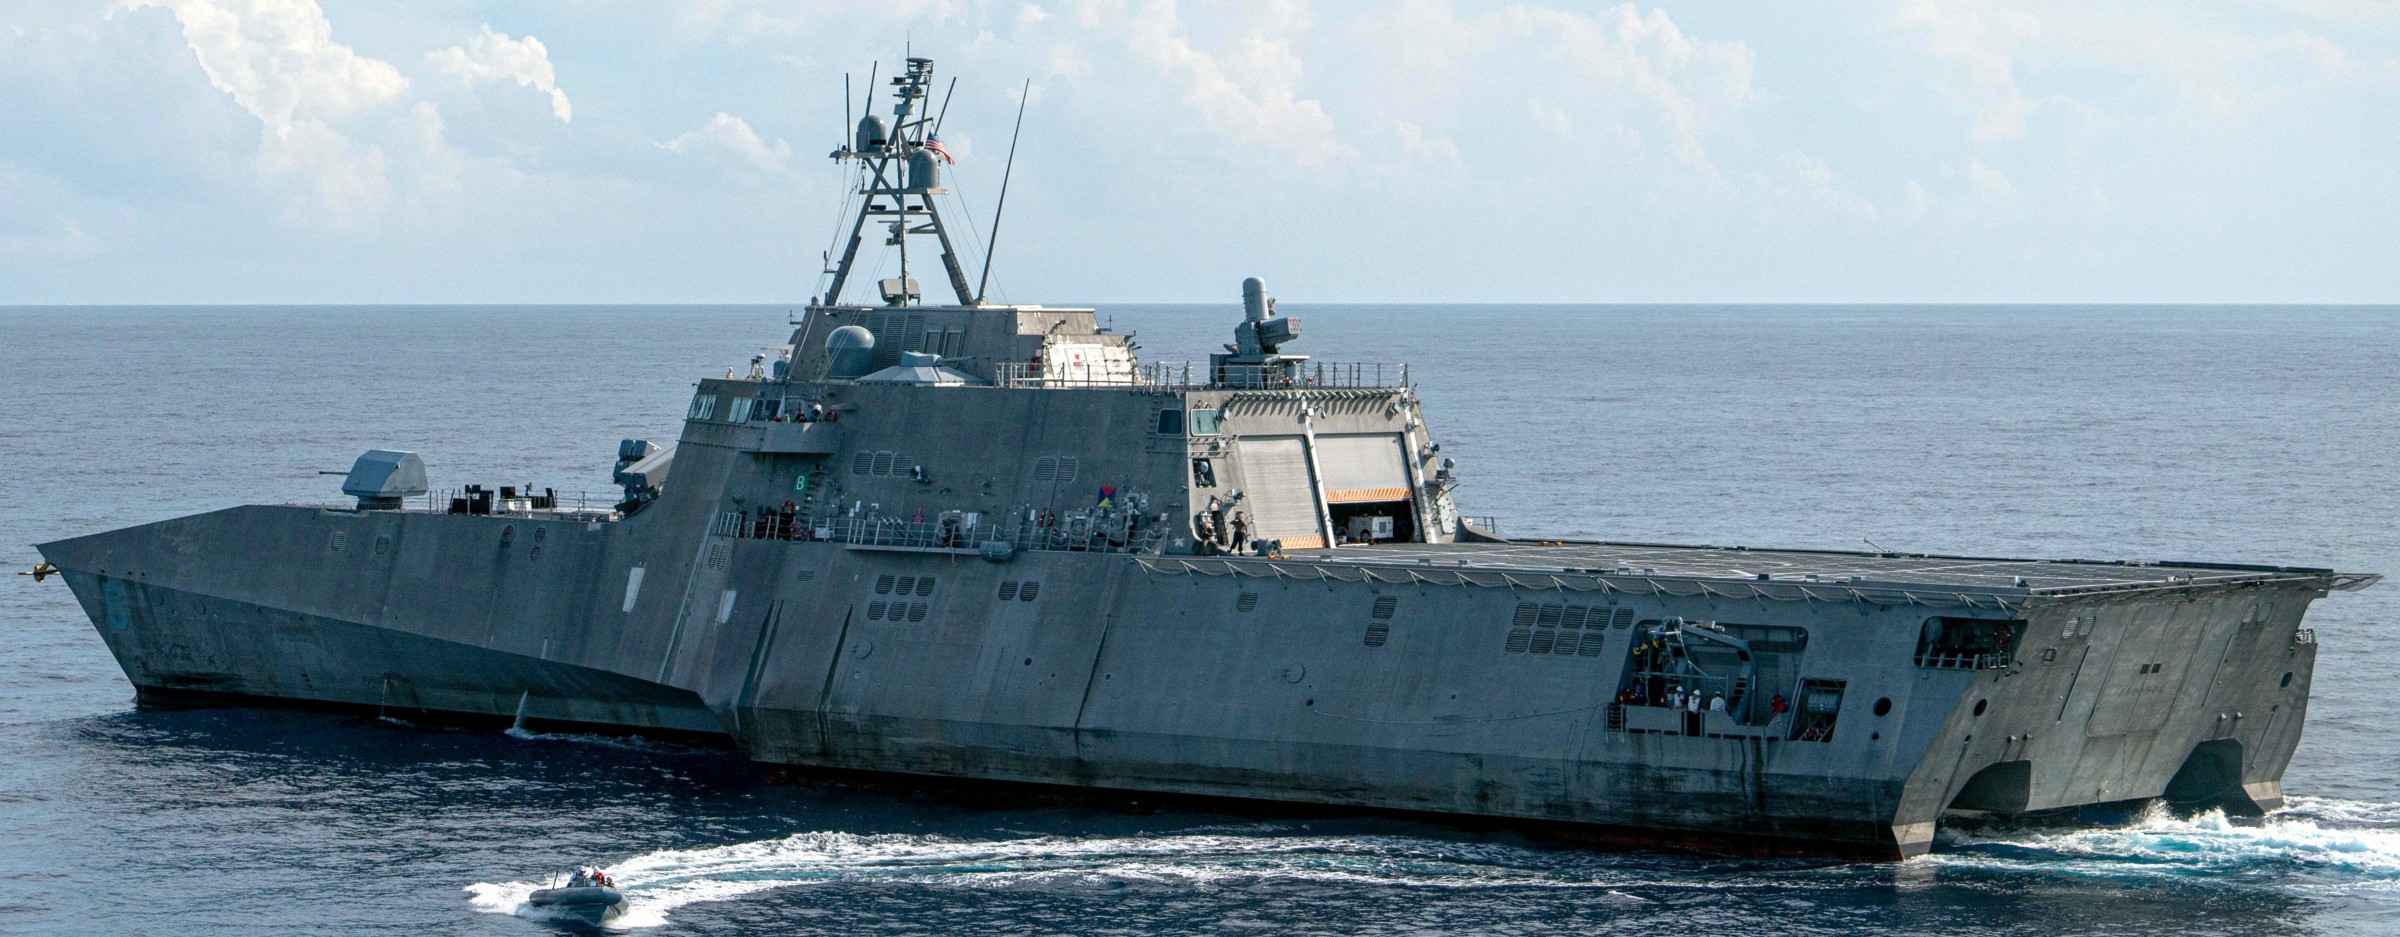 lcs-6 uss jackson independence class littoral combat ship us navy 49